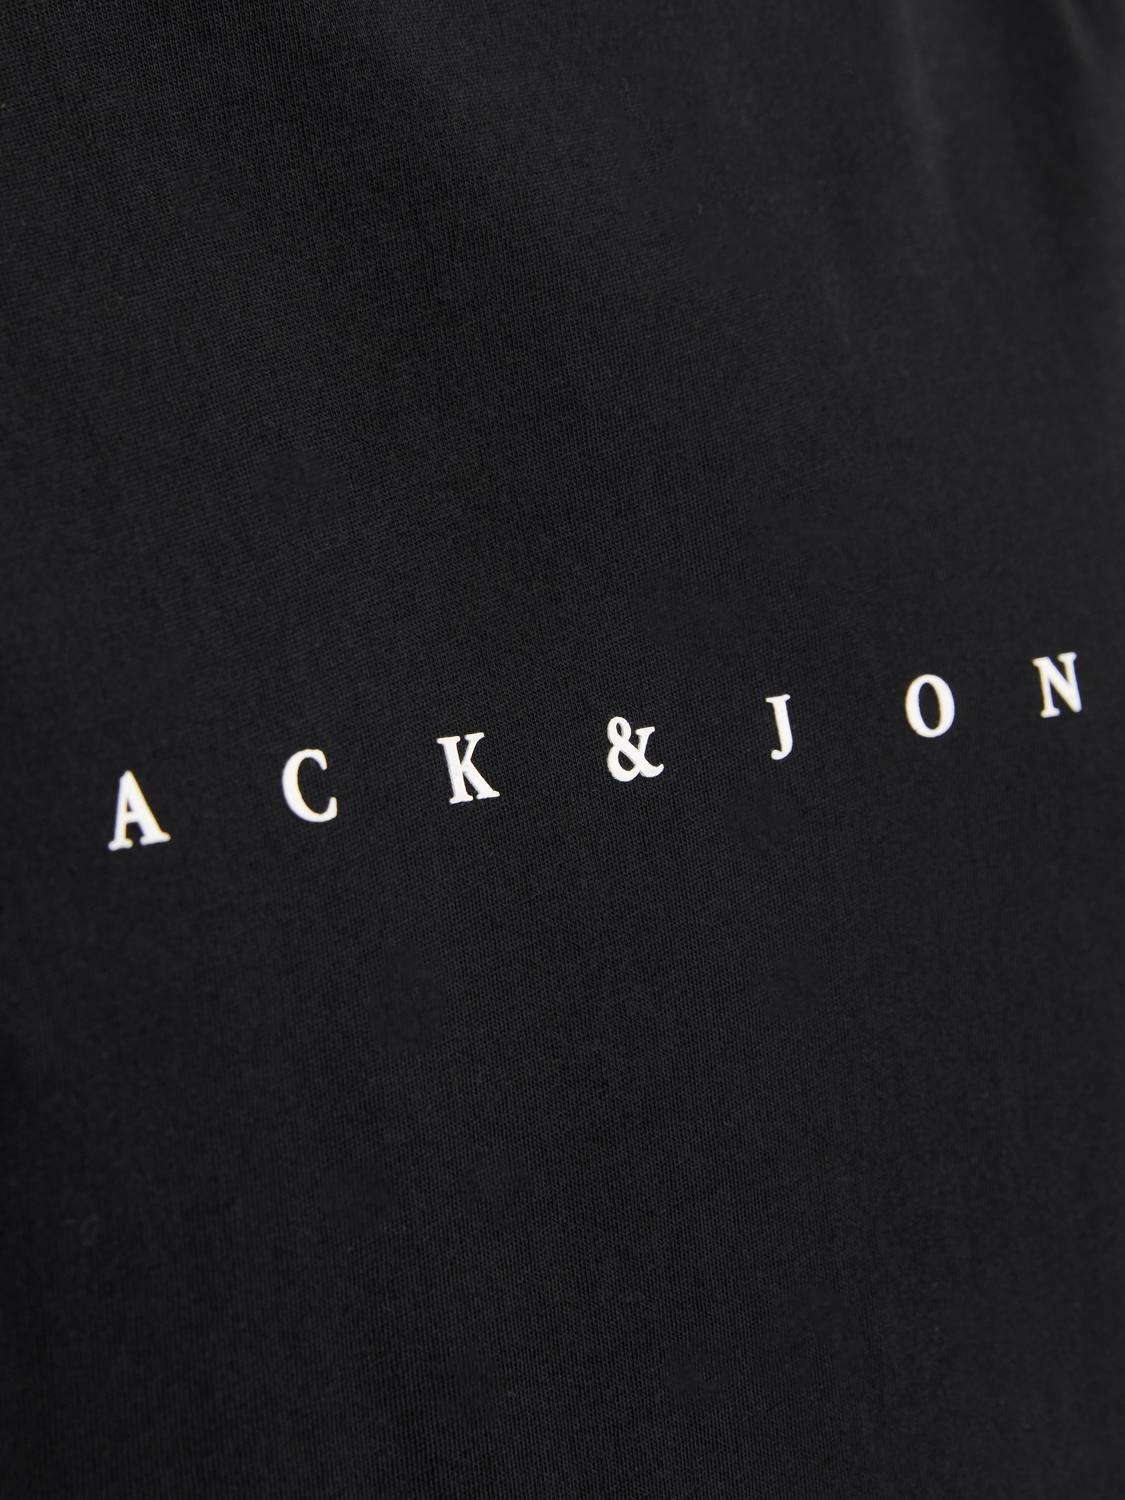 Jack & Jones Printet Crew neck T-shirt -Black - 12249131